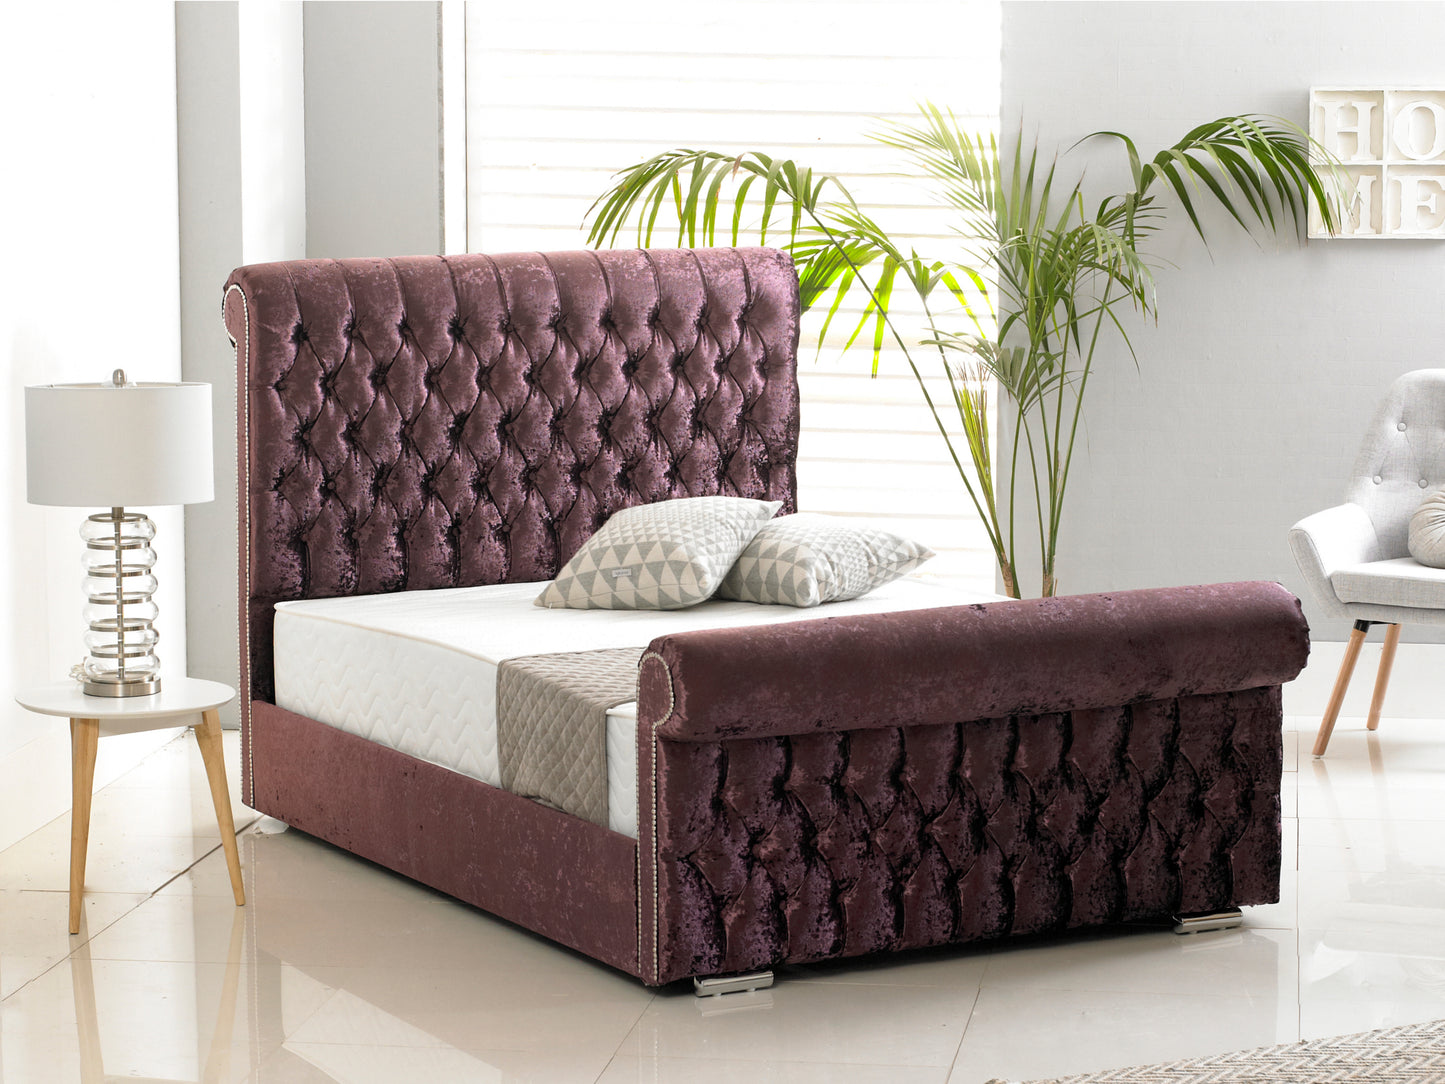 Buckingham Luxury Bed Frame in Crushed Purple